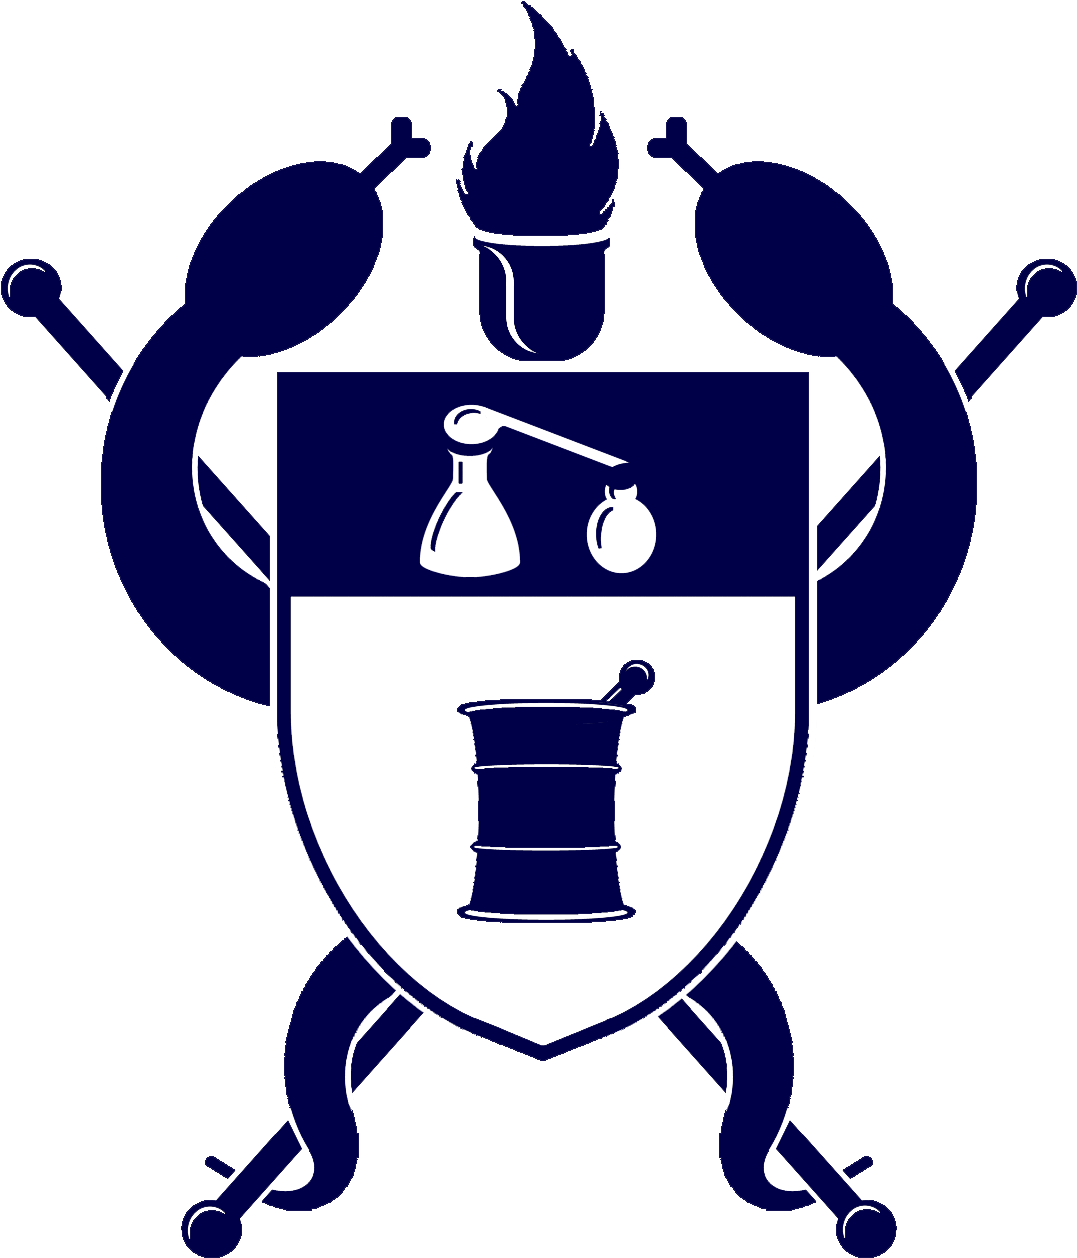 The Bpsa - British Pharmaceutical Students Association Logo (1326x1326)